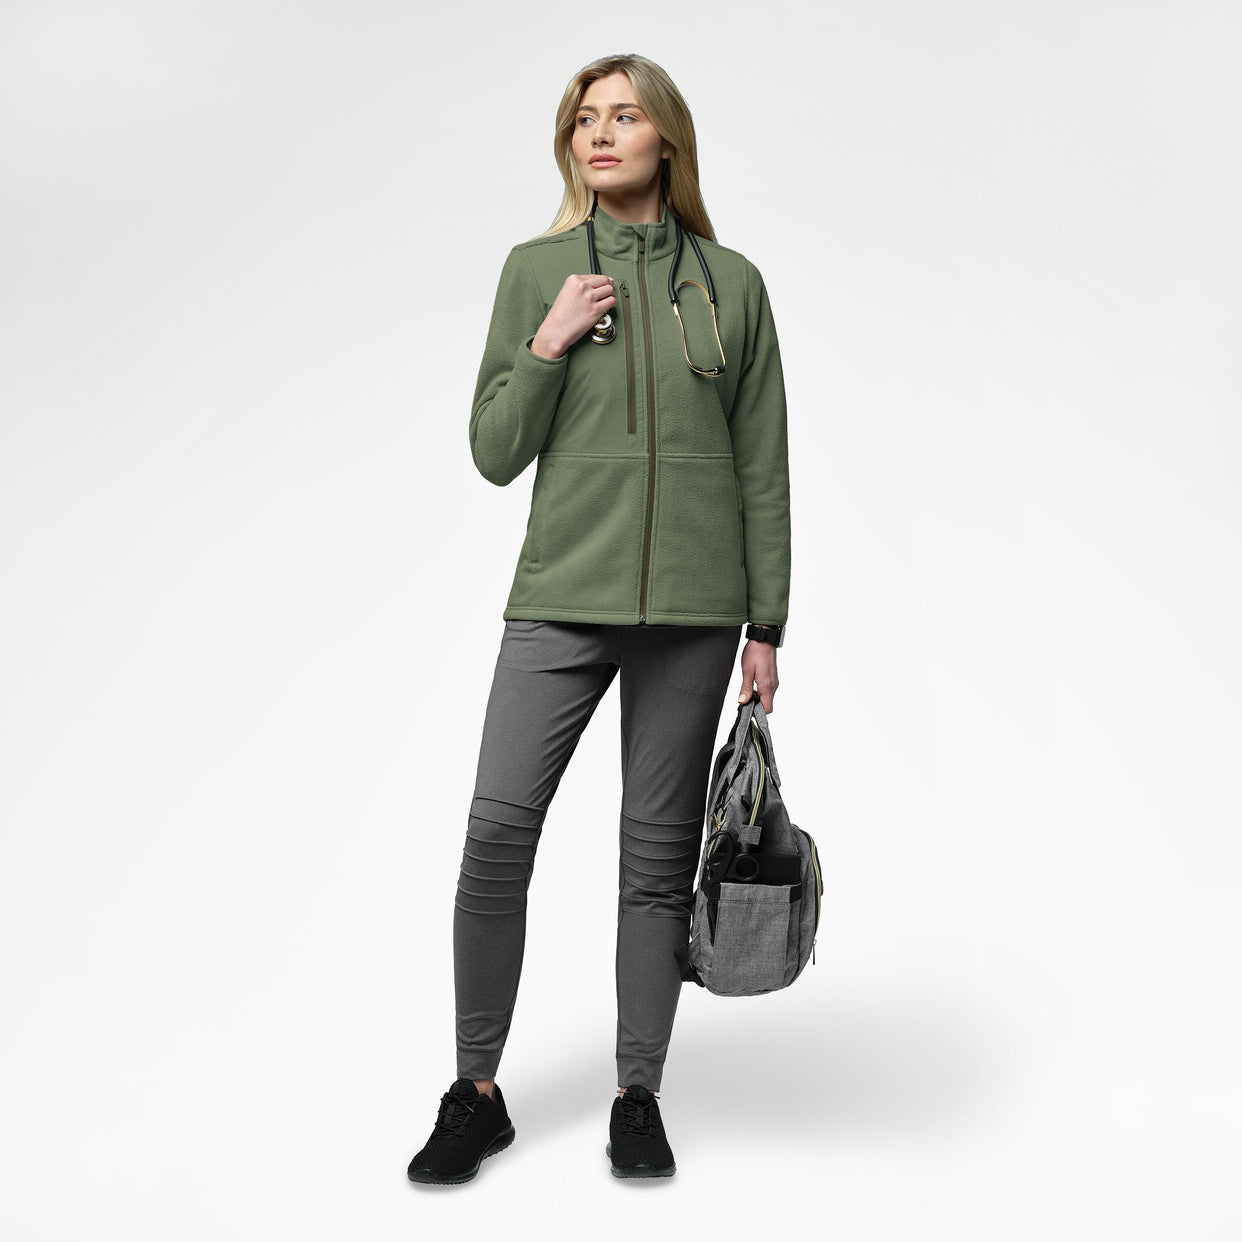 Slate Women's Micro Fleece Zip Jacket Olive full scrub set